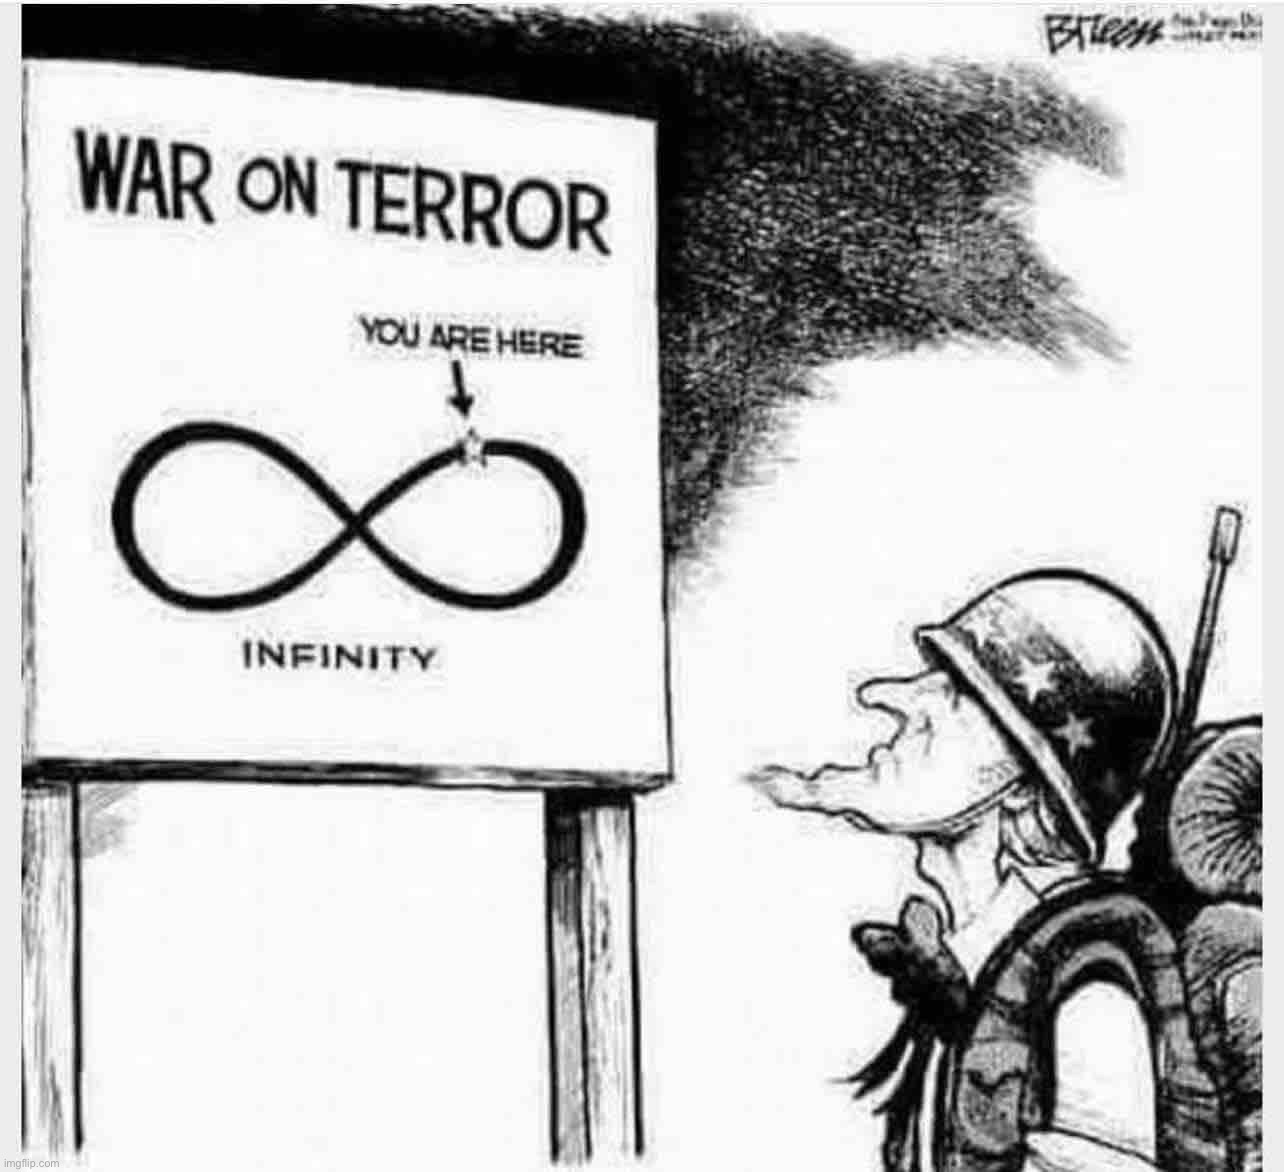 Hmmm | image tagged in war on terror infinity,war on terror,terrorism,terror,islamic terrorism,comics/cartoons | made w/ Imgflip meme maker